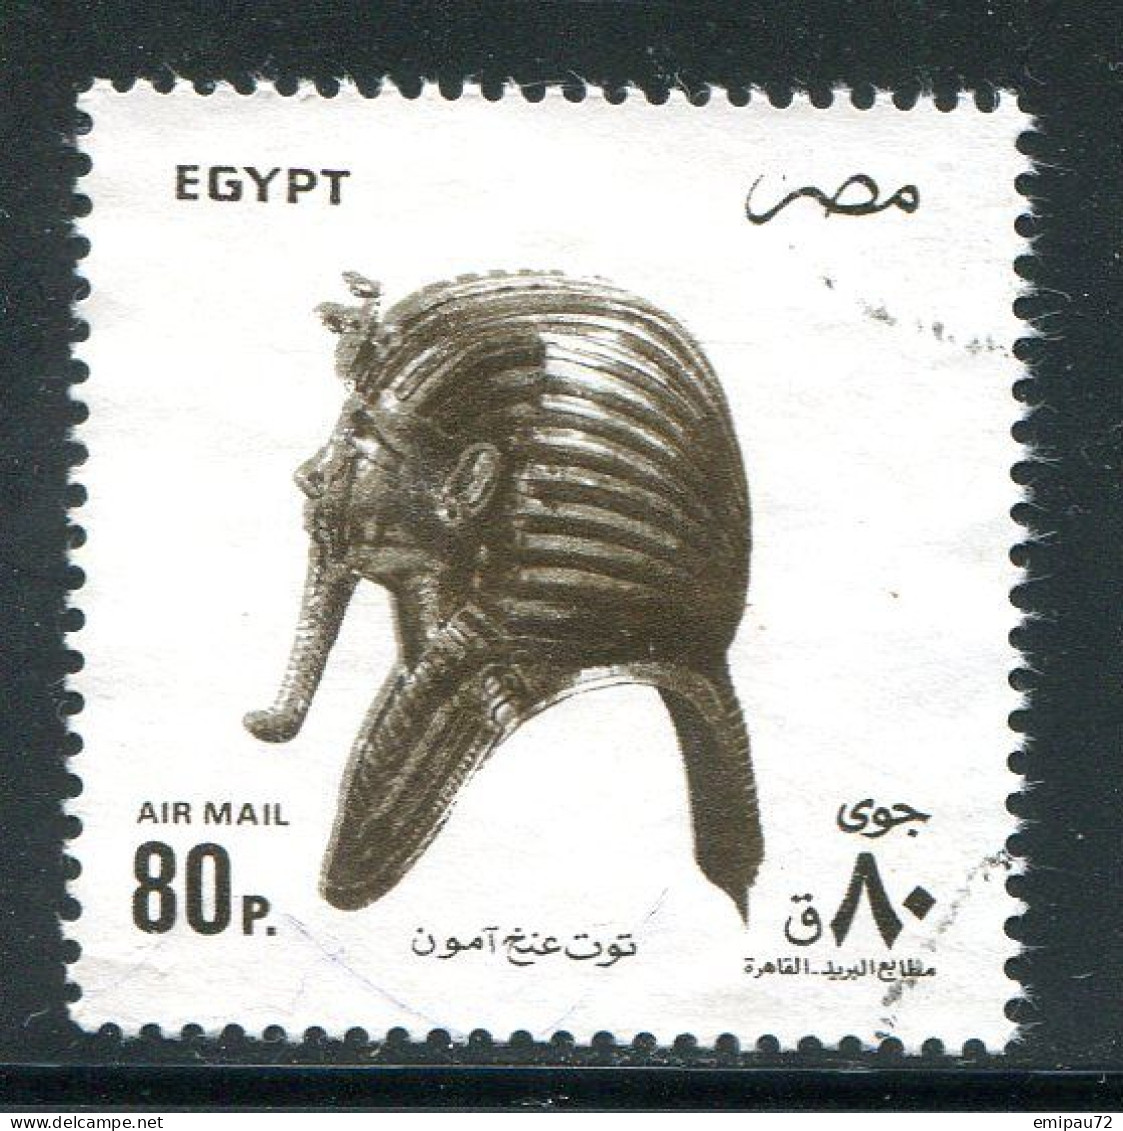 EGYPTE- P.A Y&T N°220- Oblitéré - Posta Aerea